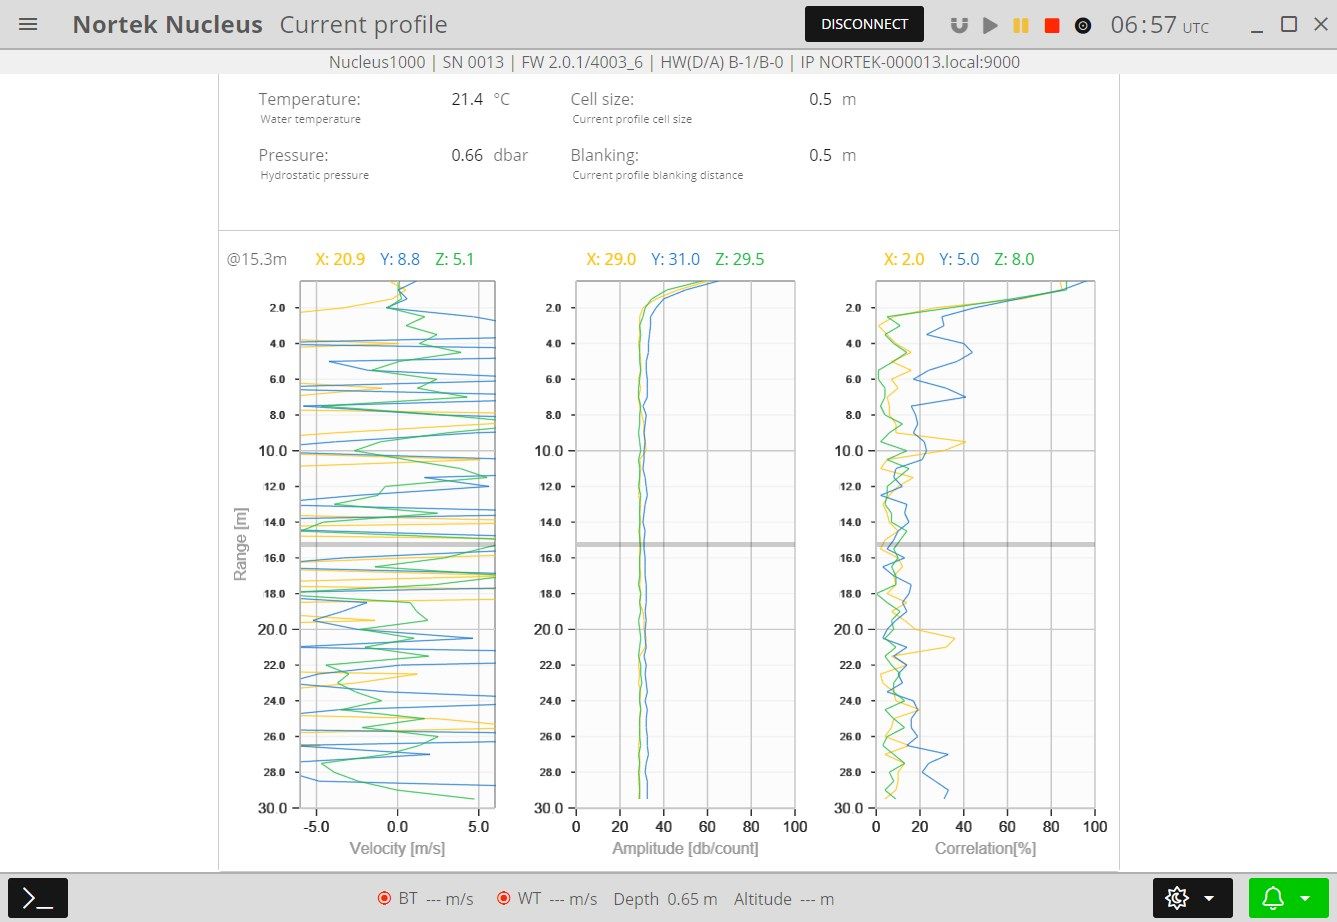 Data visualization in current profile dashboard.